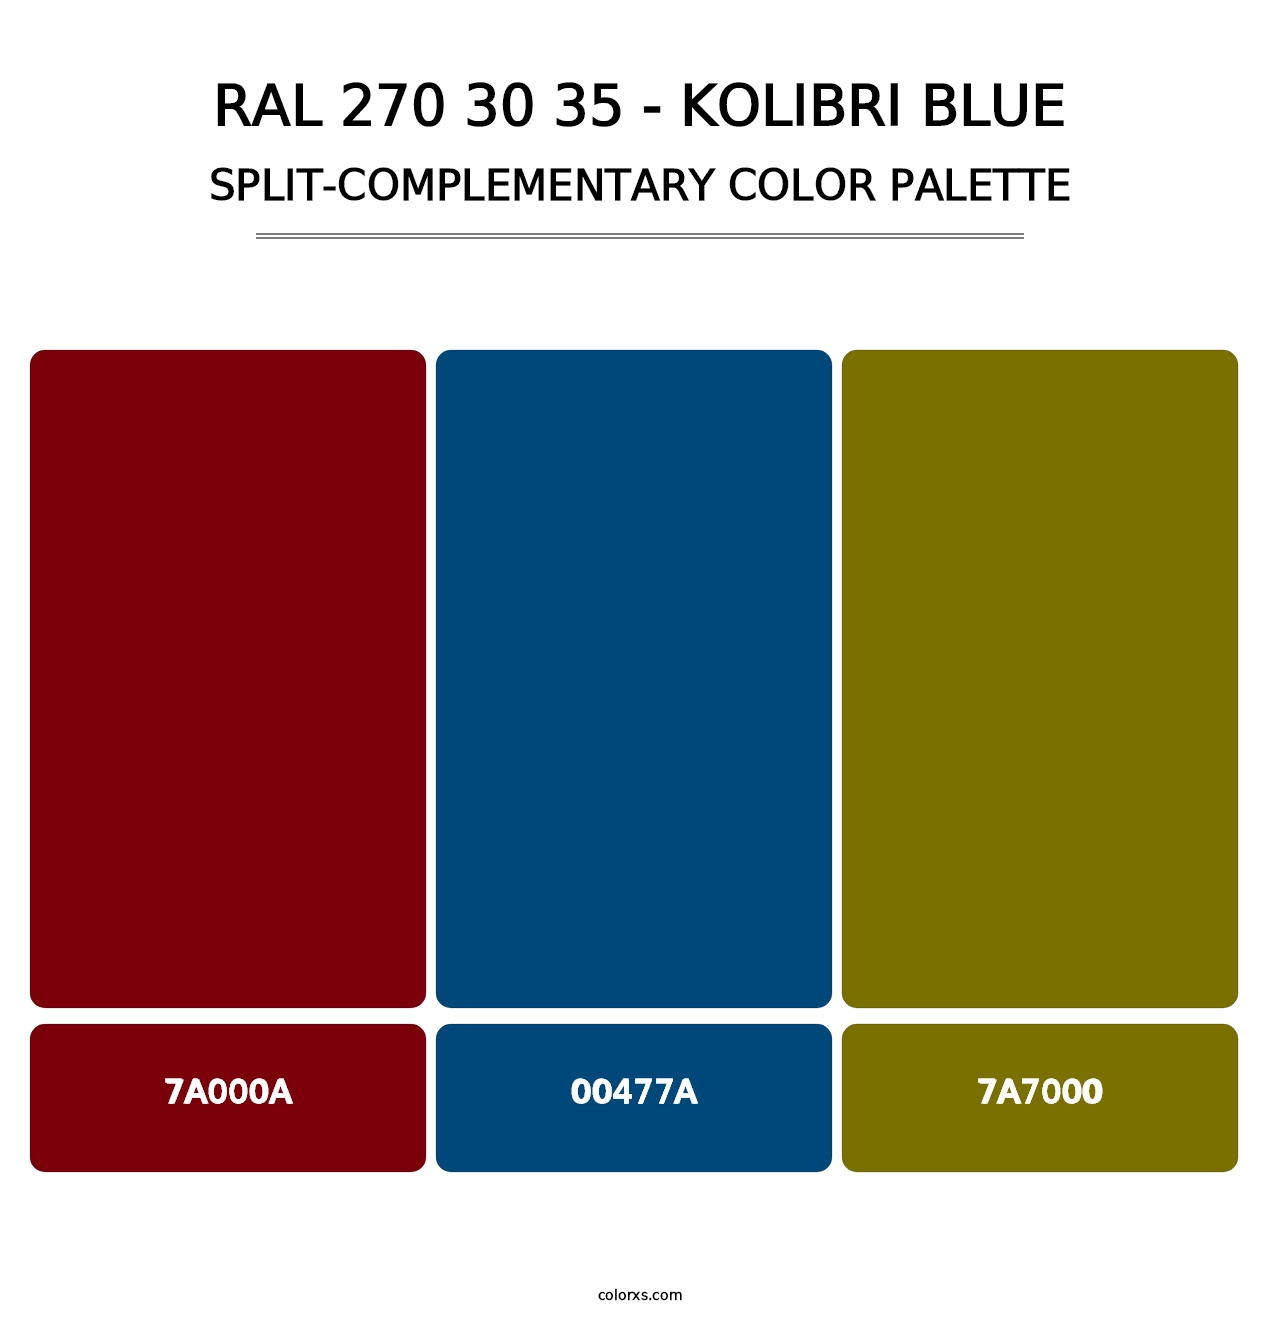 RAL 270 30 35 - Kolibri Blue - Split-Complementary Color Palette